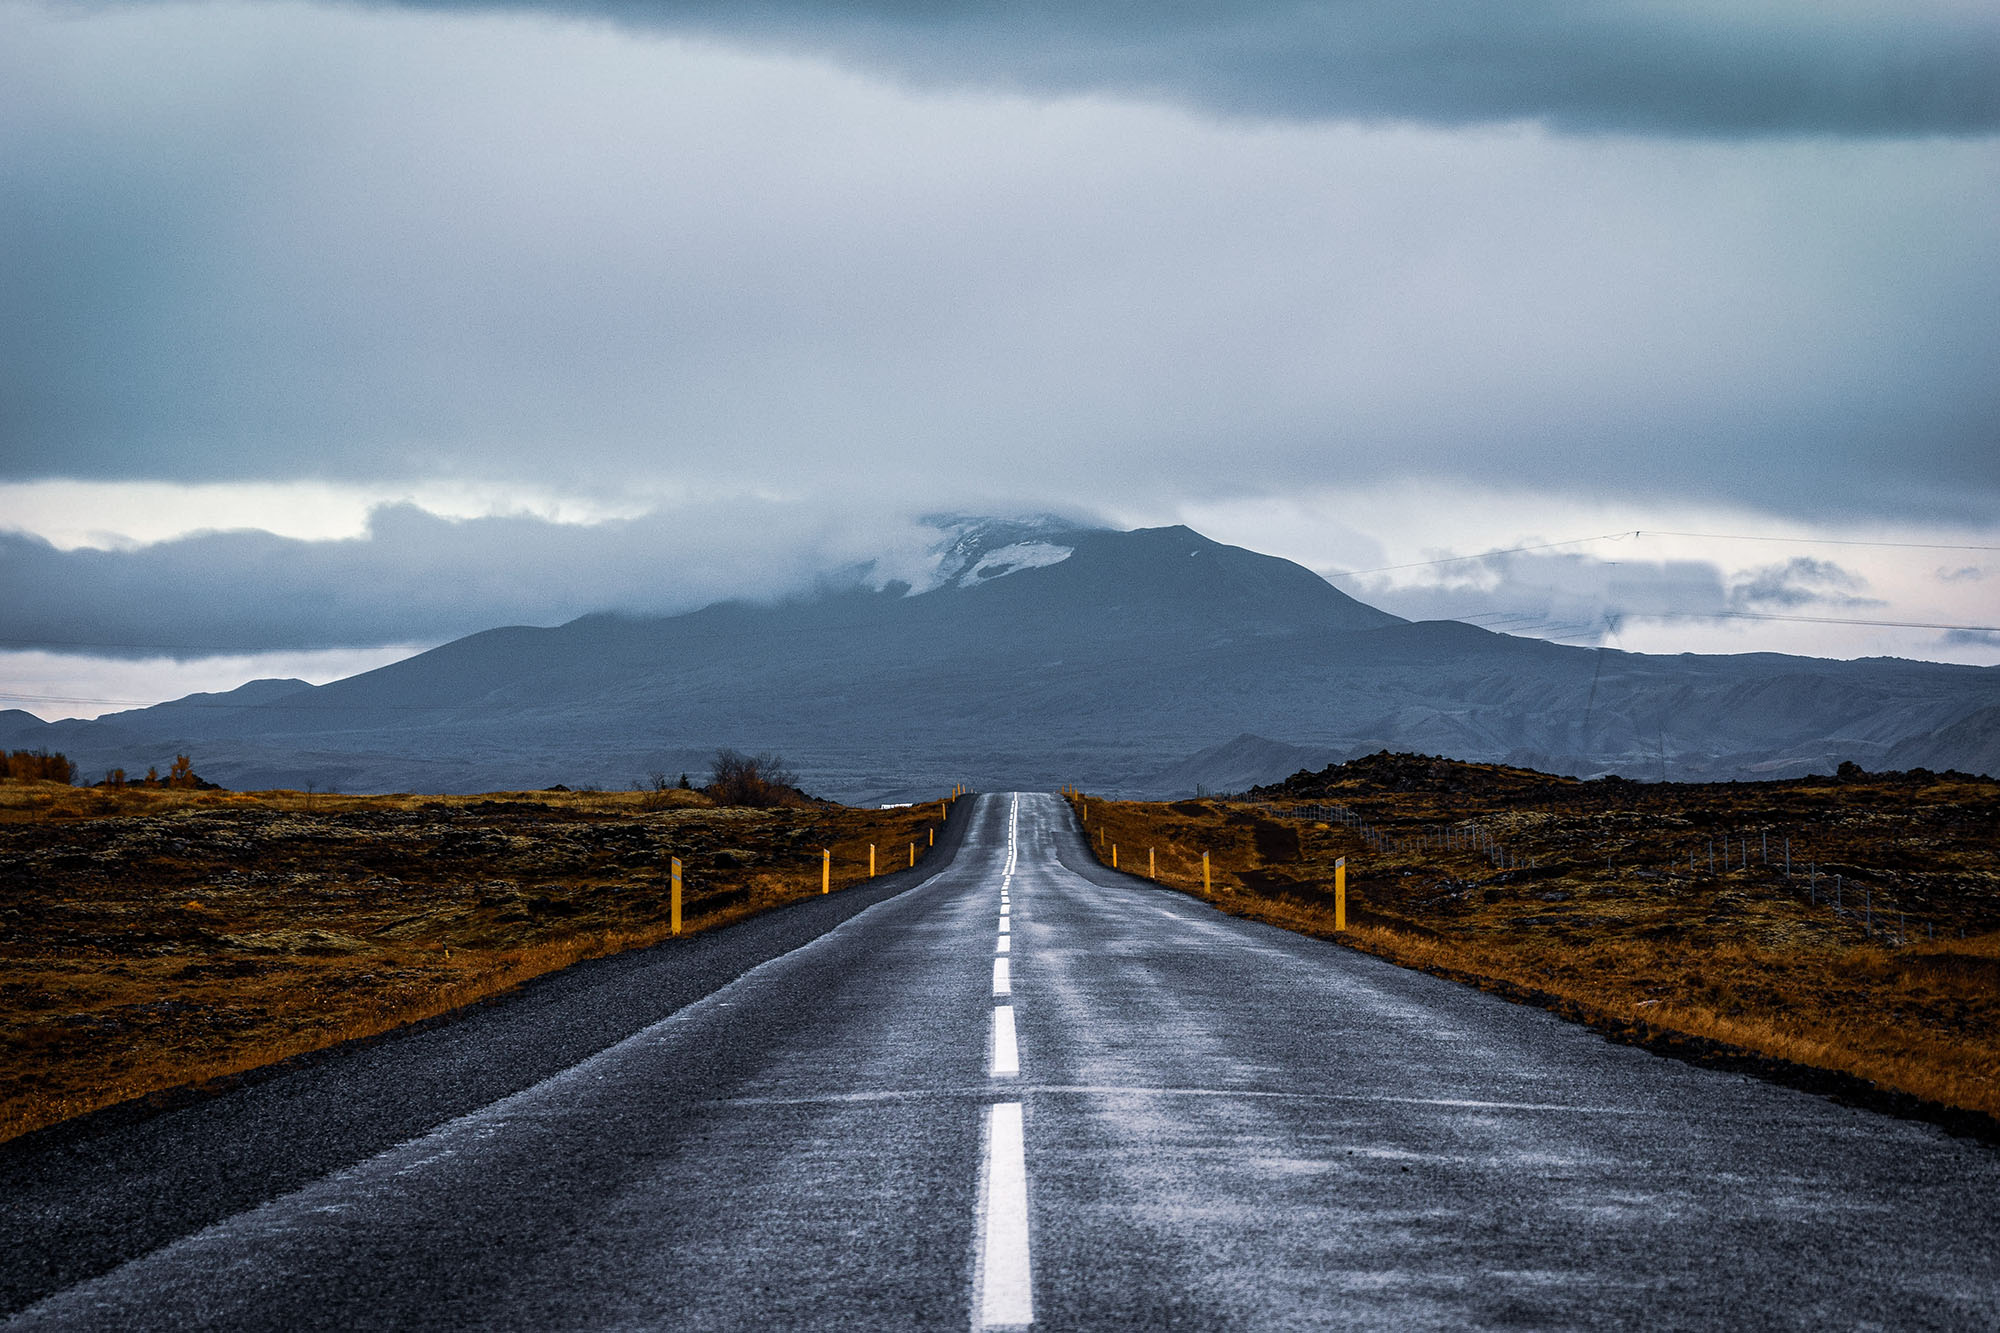 An empty road heading towards a mountain.